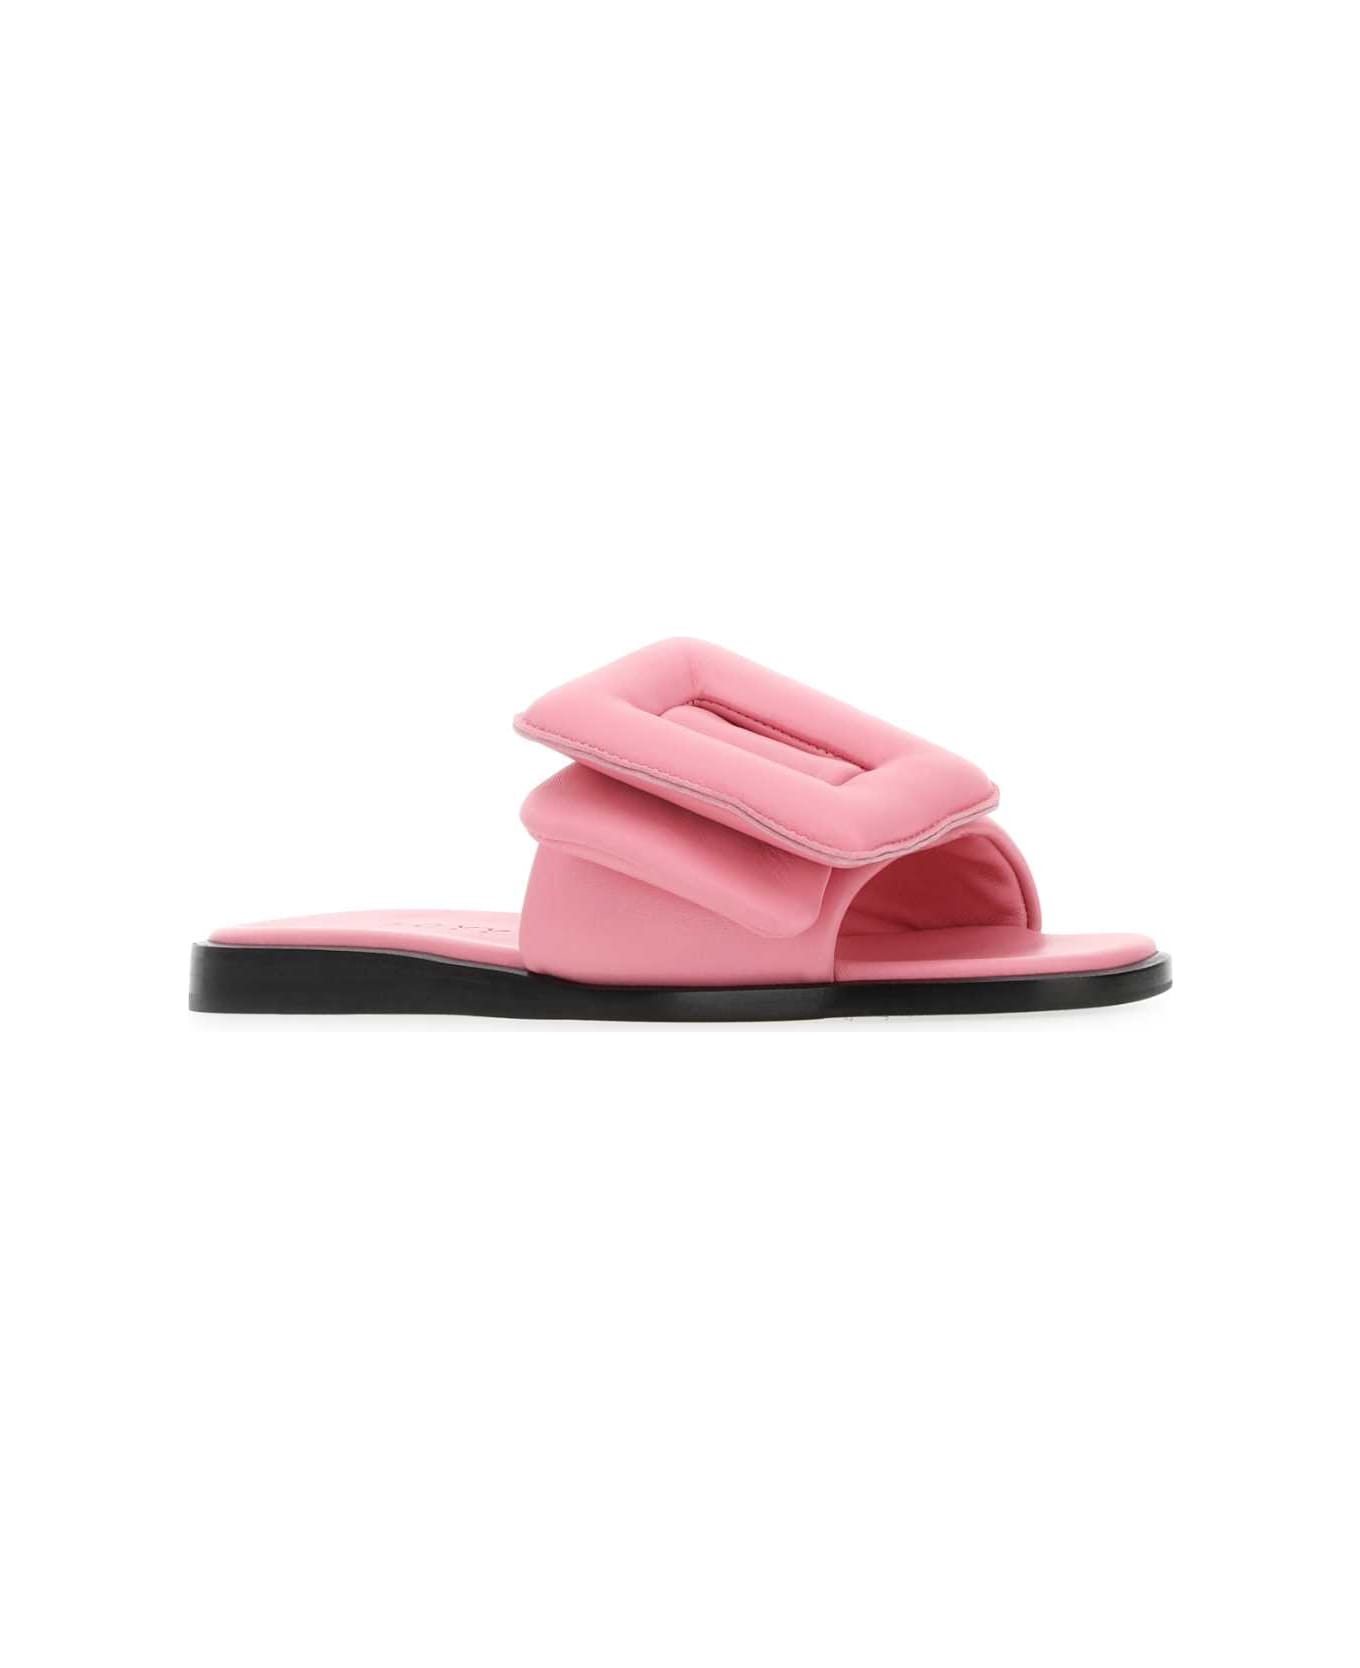 BOYY Pink Leather Puffy Slippers - BUBGUM